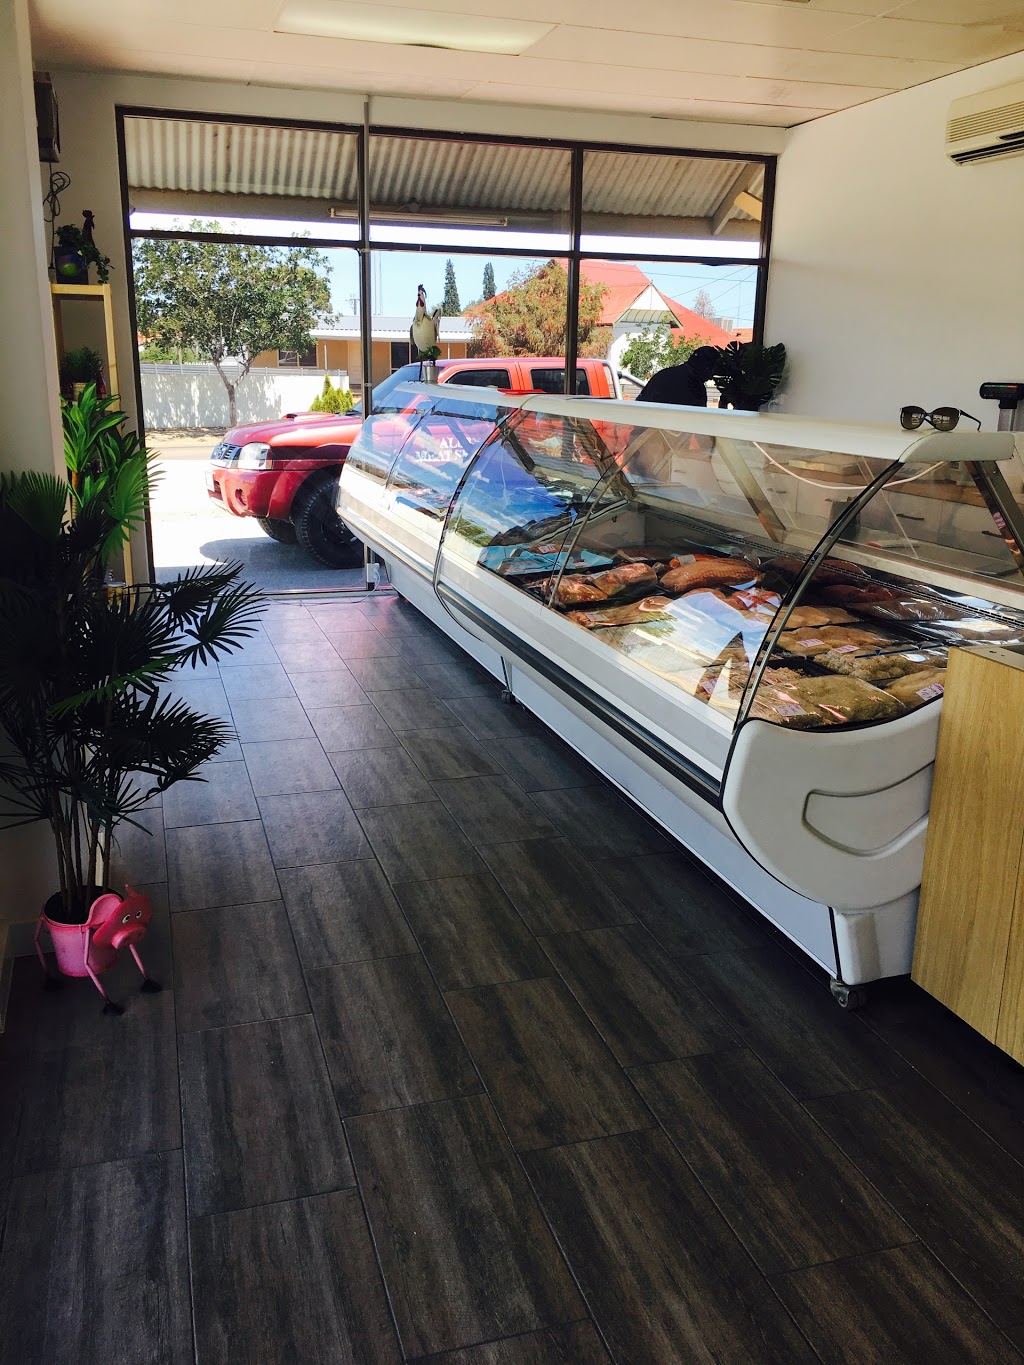 Alexs Meat | store | 300 The Terrace, Port Pirie West SA 5540, Australia | 0886321107 OR +61 8 8632 1107